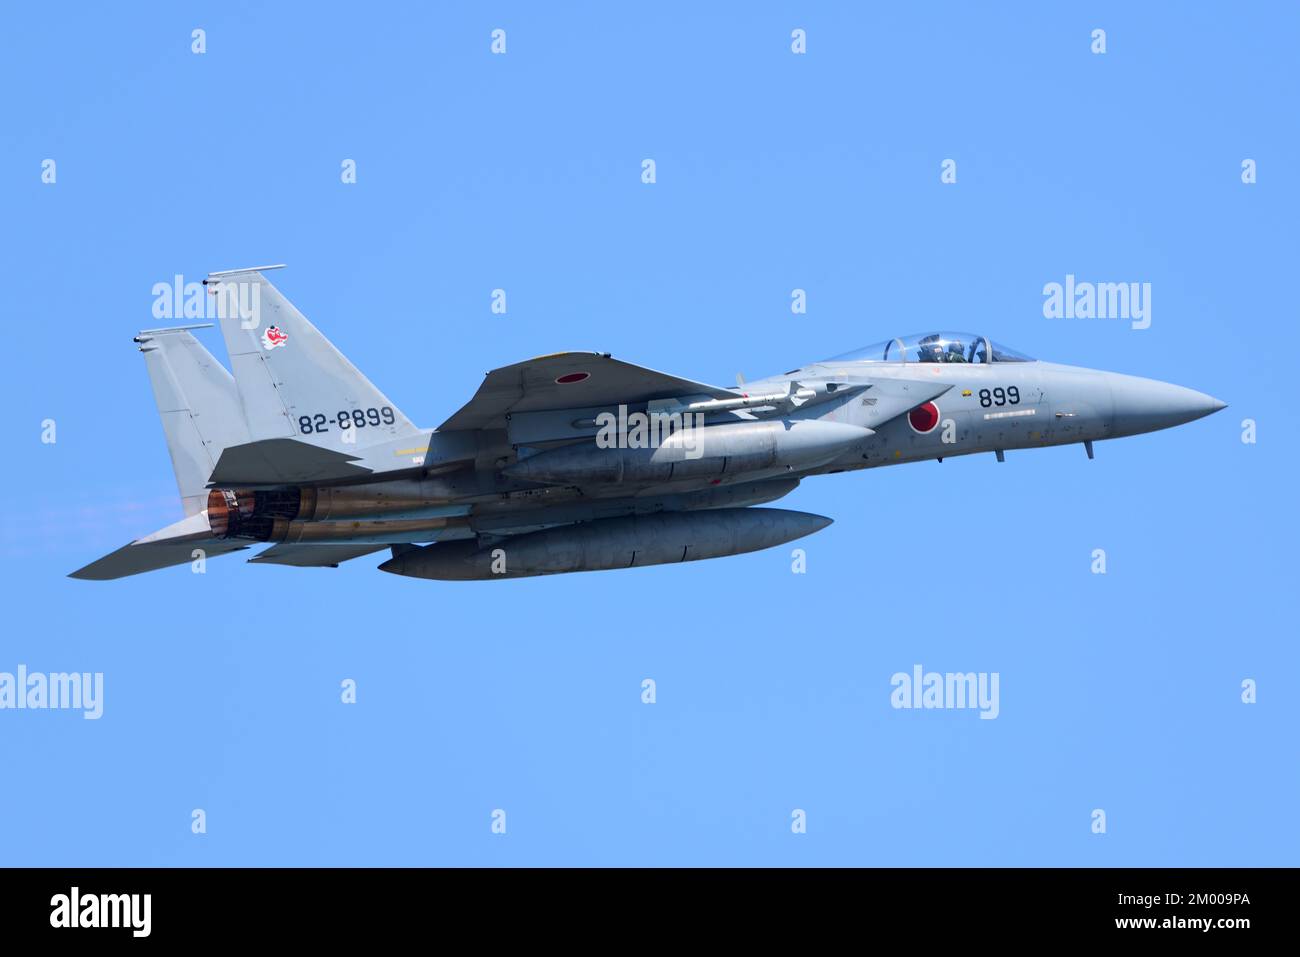 Fukuoka Prefecture, Japan - April 14, 2014: Japan Air Self-Defense Force Boeing F-15J Eagle scrambling with full afterburners. Stock Photo